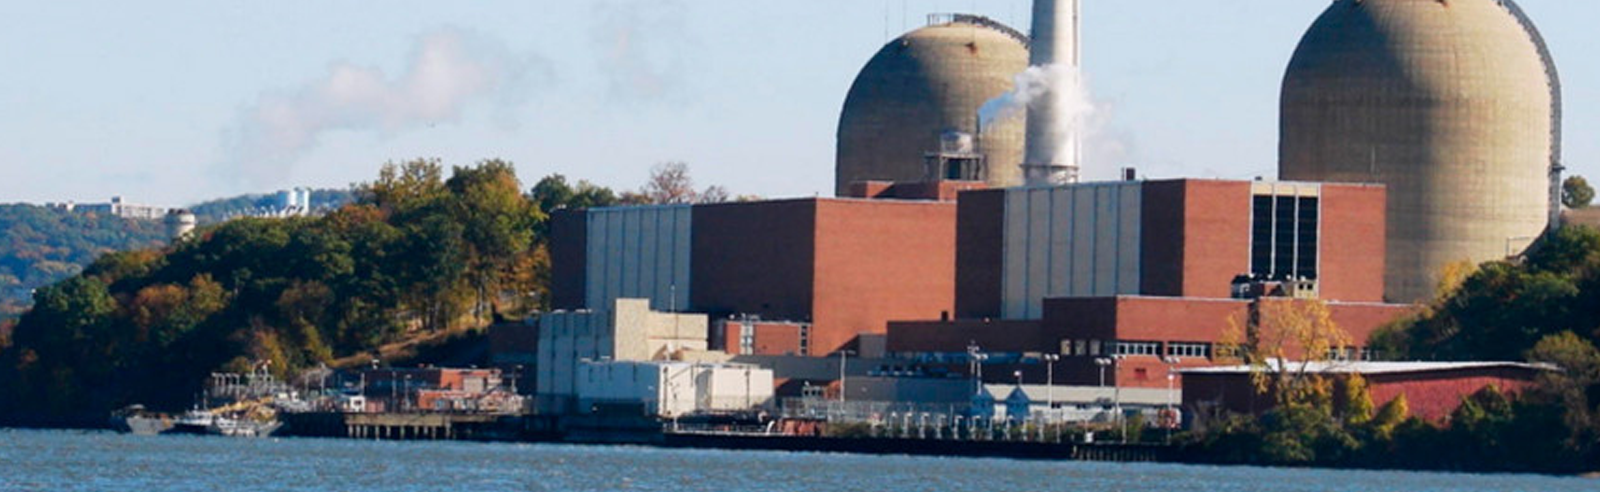 Bird poop blamed for nuclear reactor shutdown